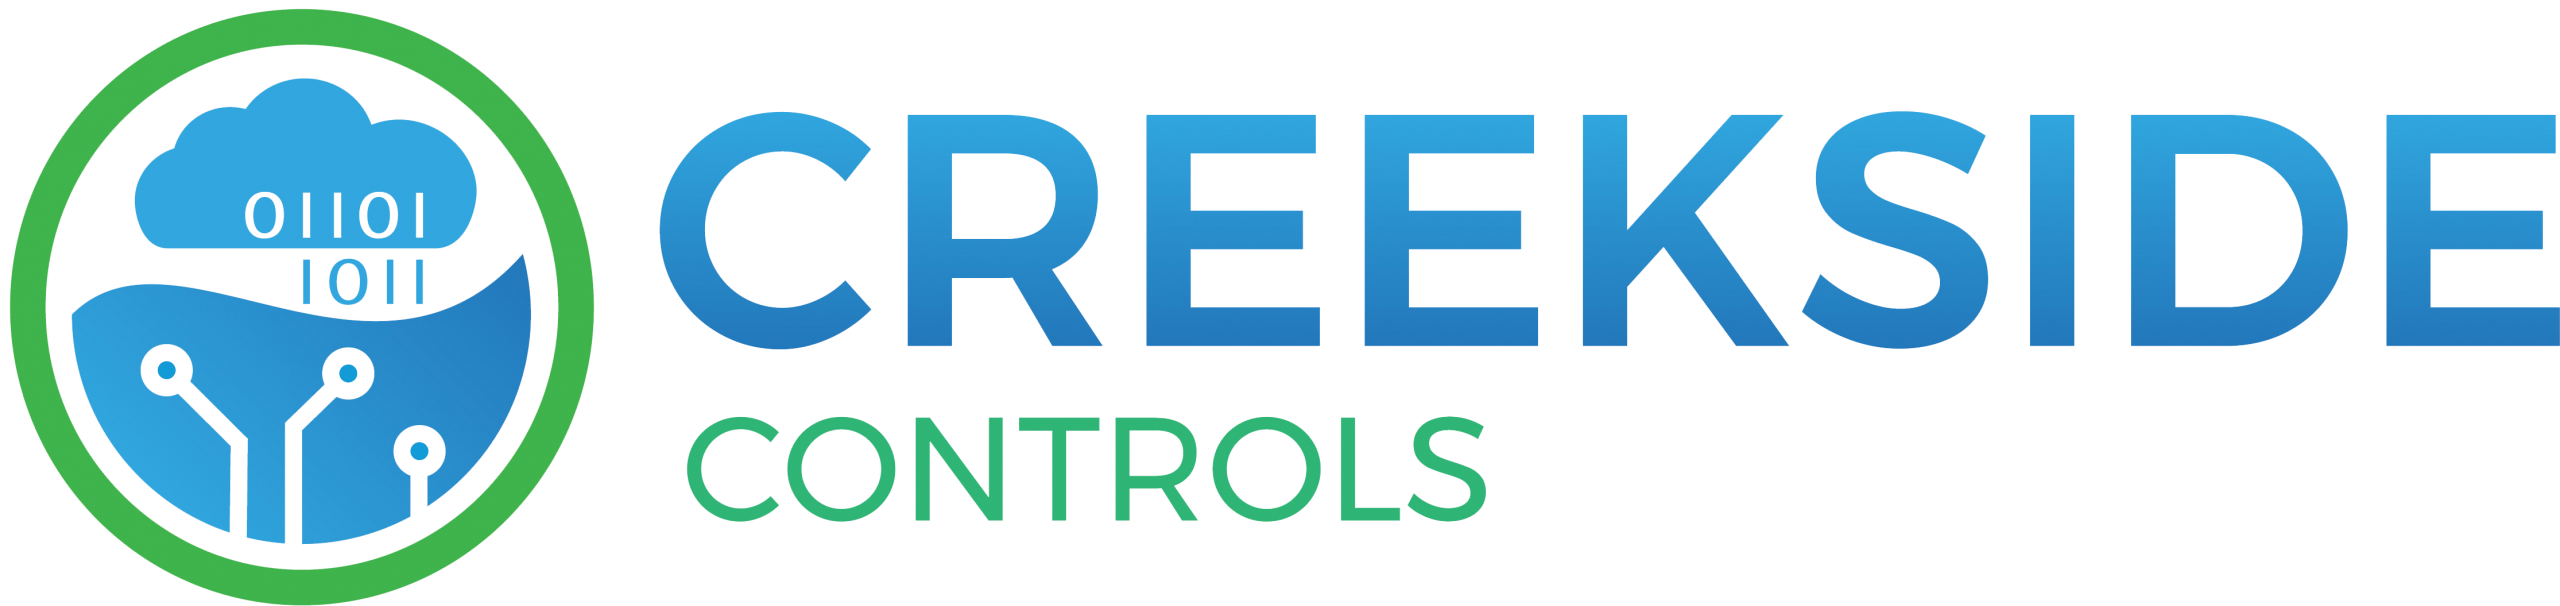 Creekside Controls Logo RGB